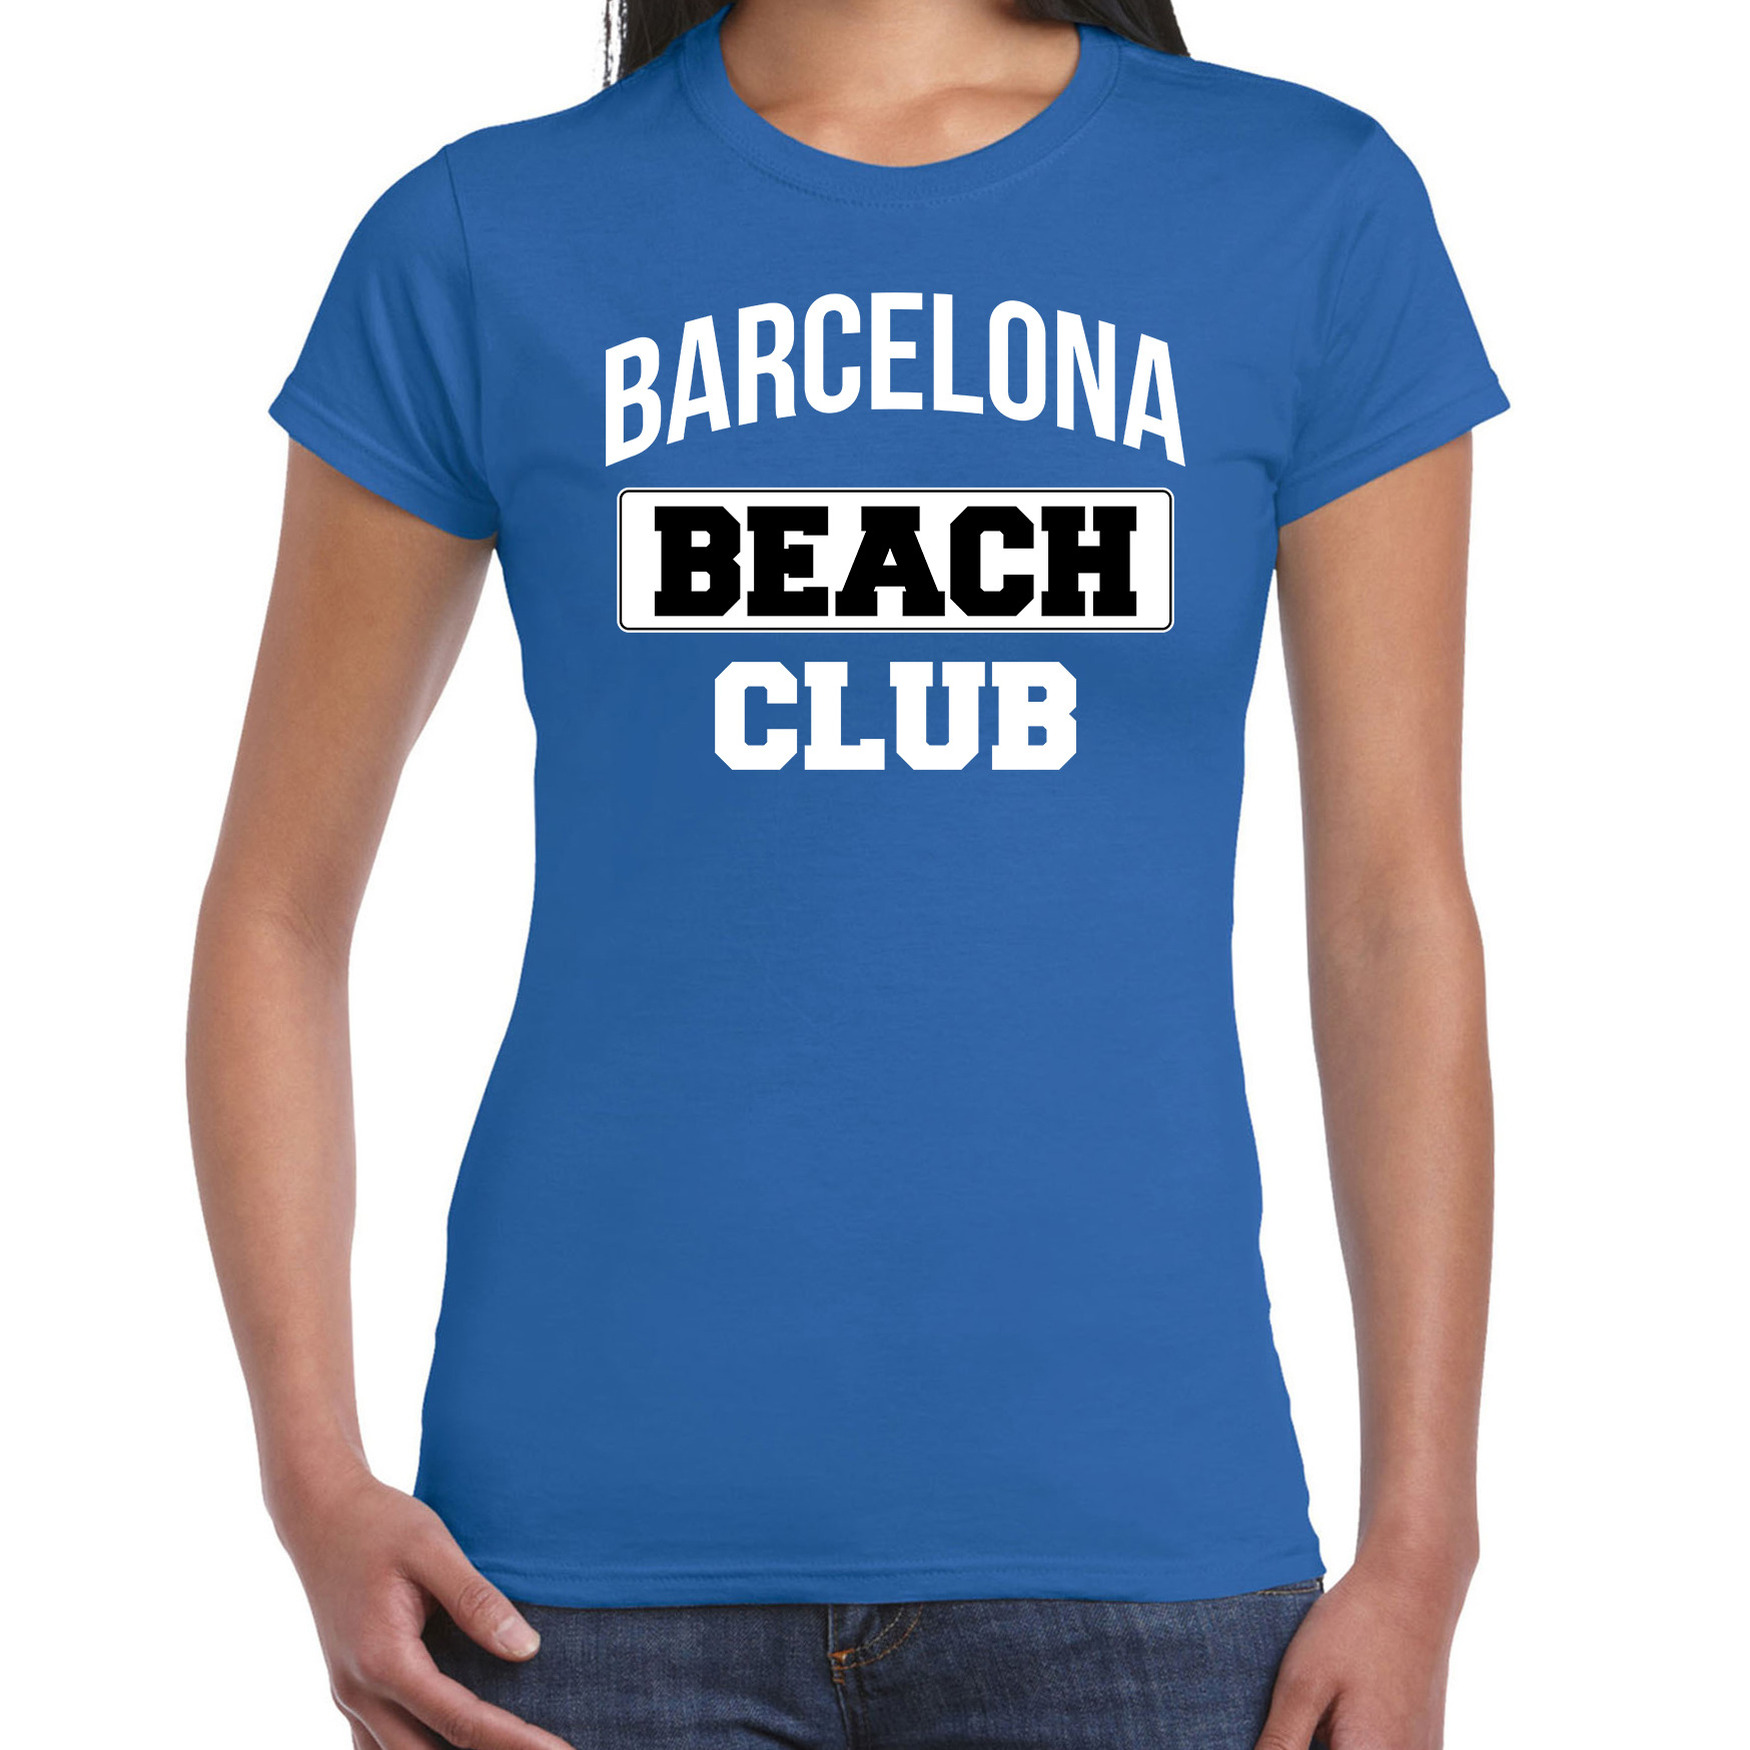 Barcelona beach club zomer t-shirt blauw voor dames